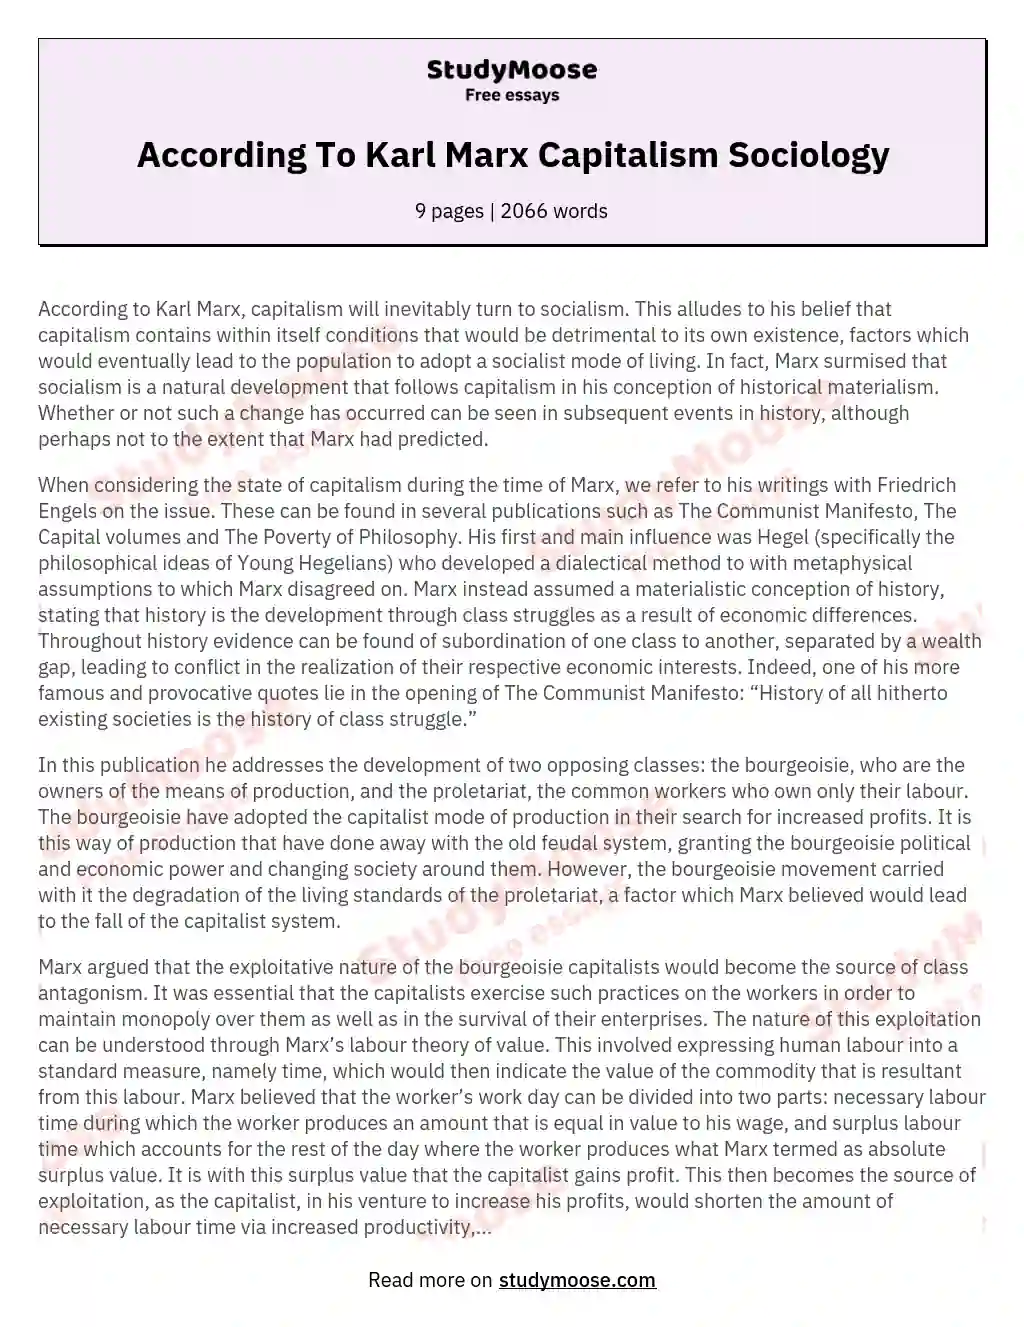 According To Karl Marx Capitalism Sociology essay